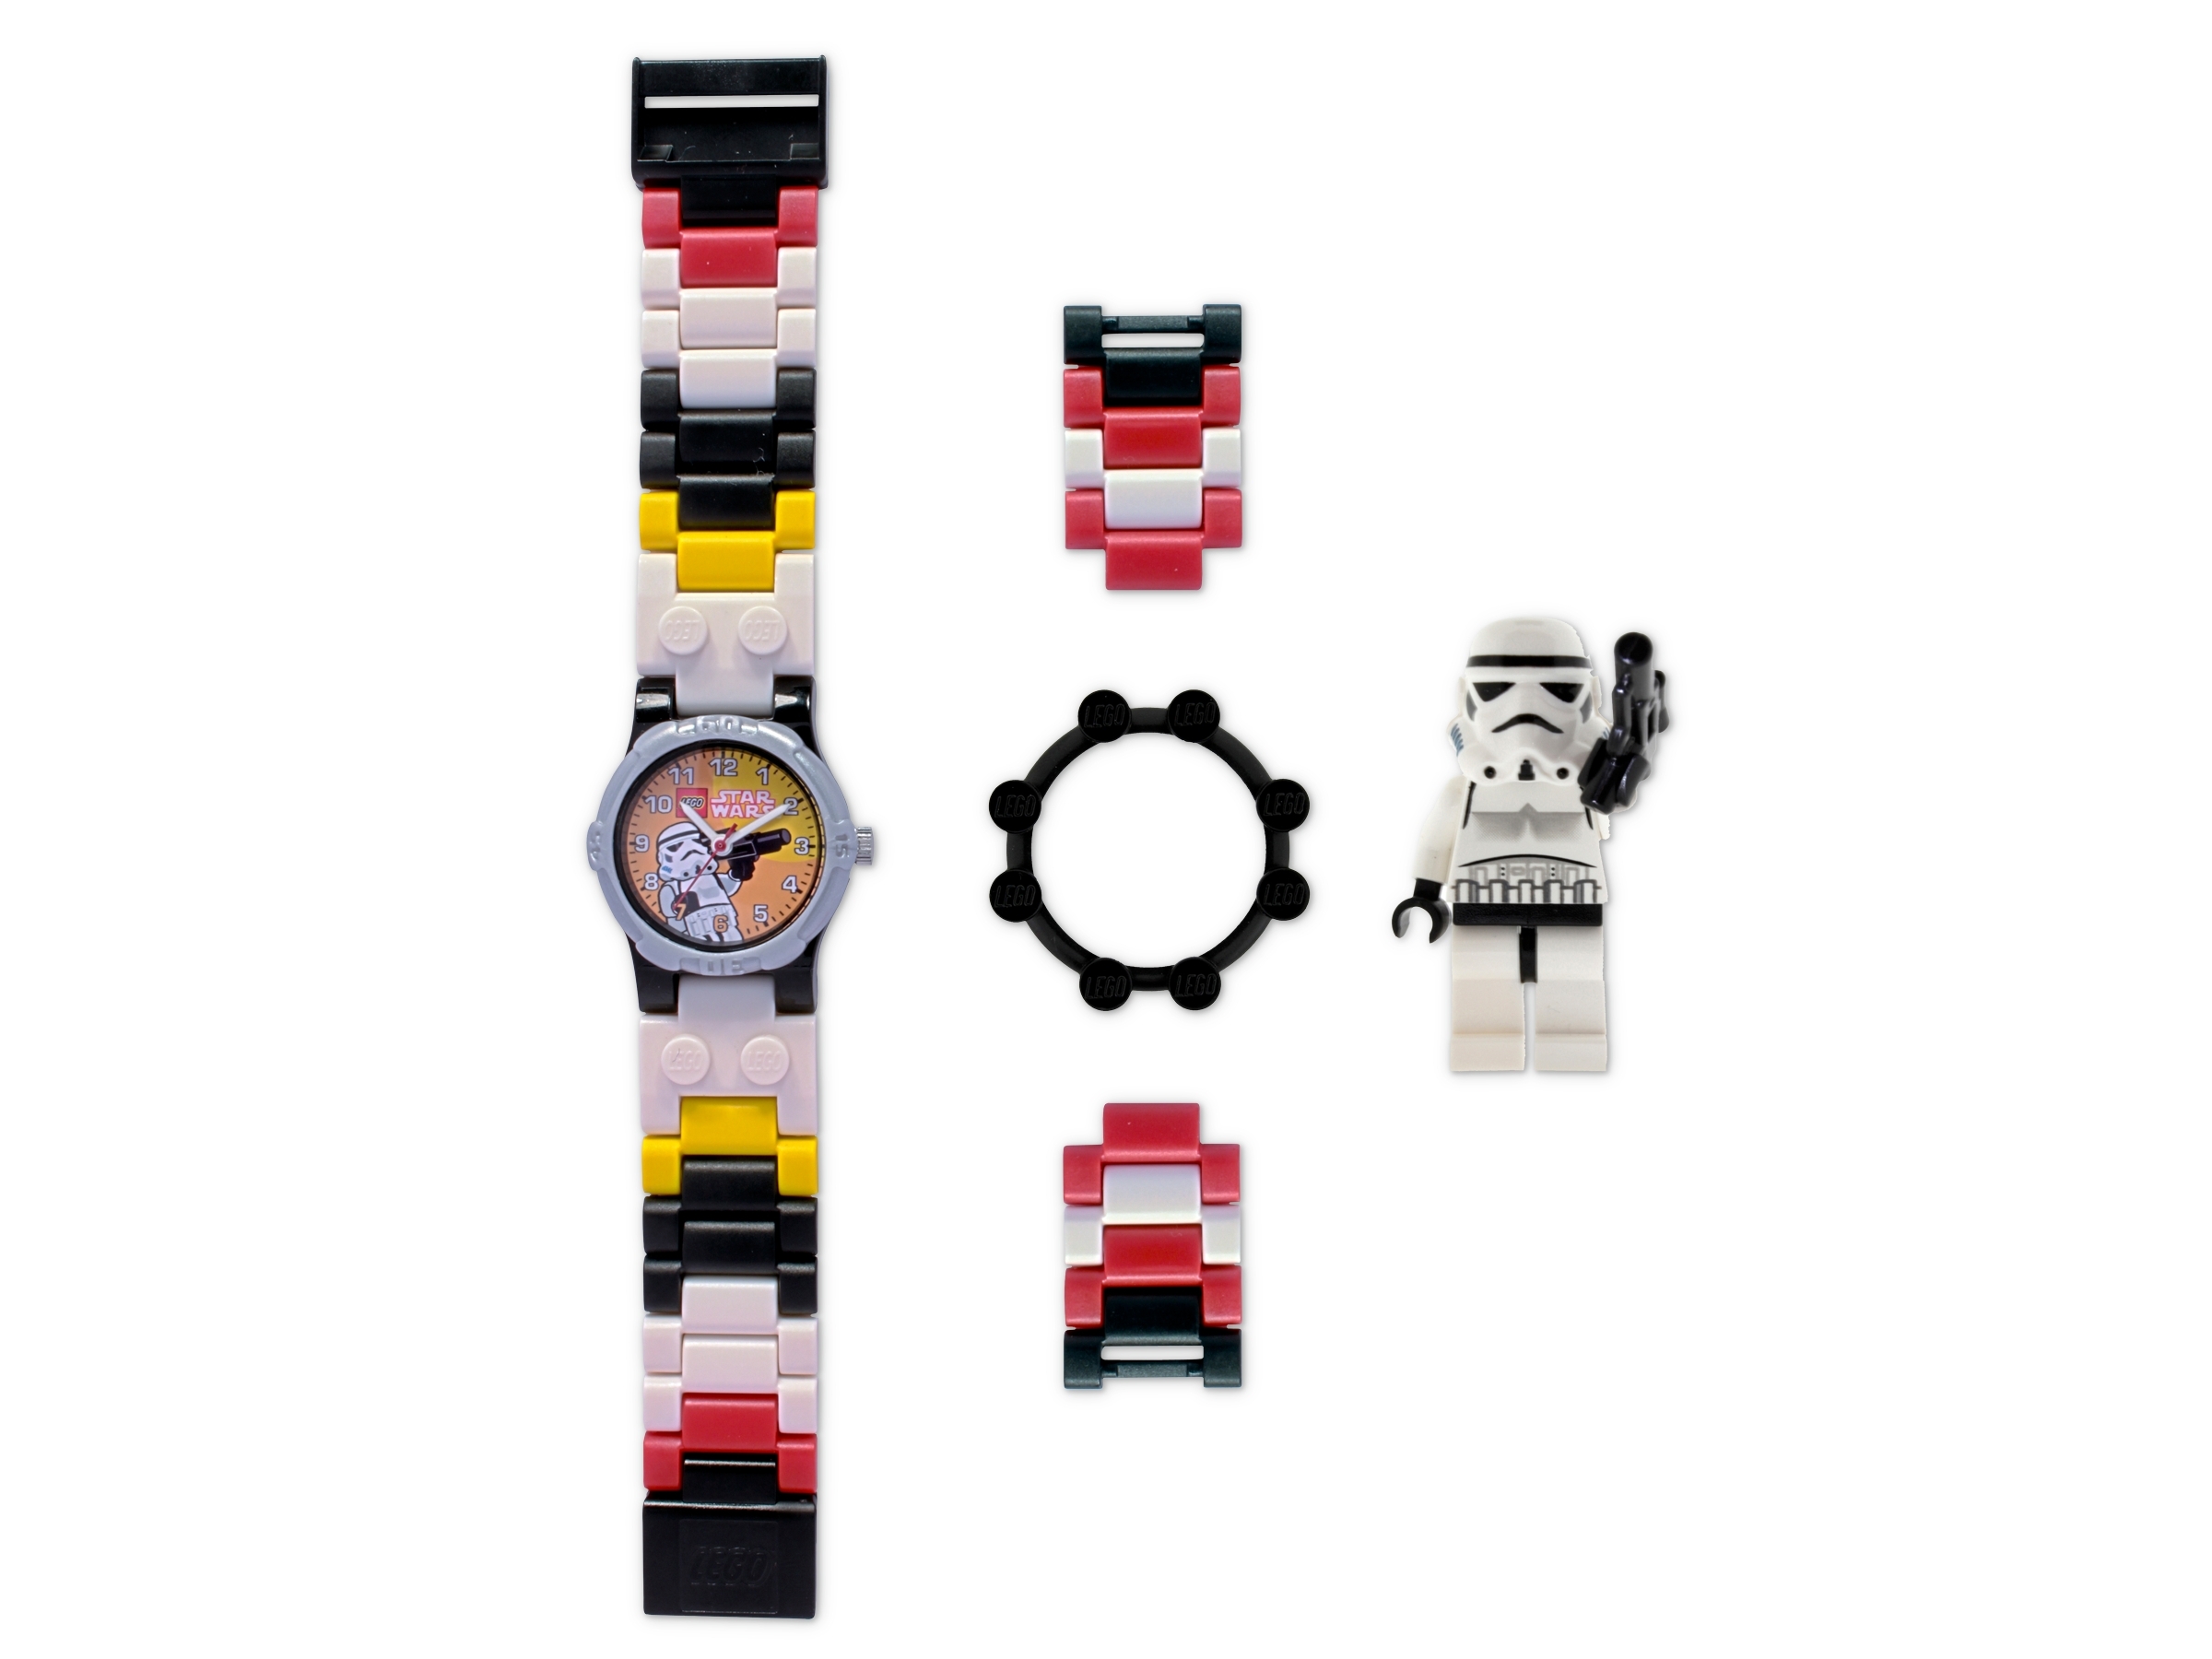 The LEGO Star Wars Kids Watch Series - R2D2